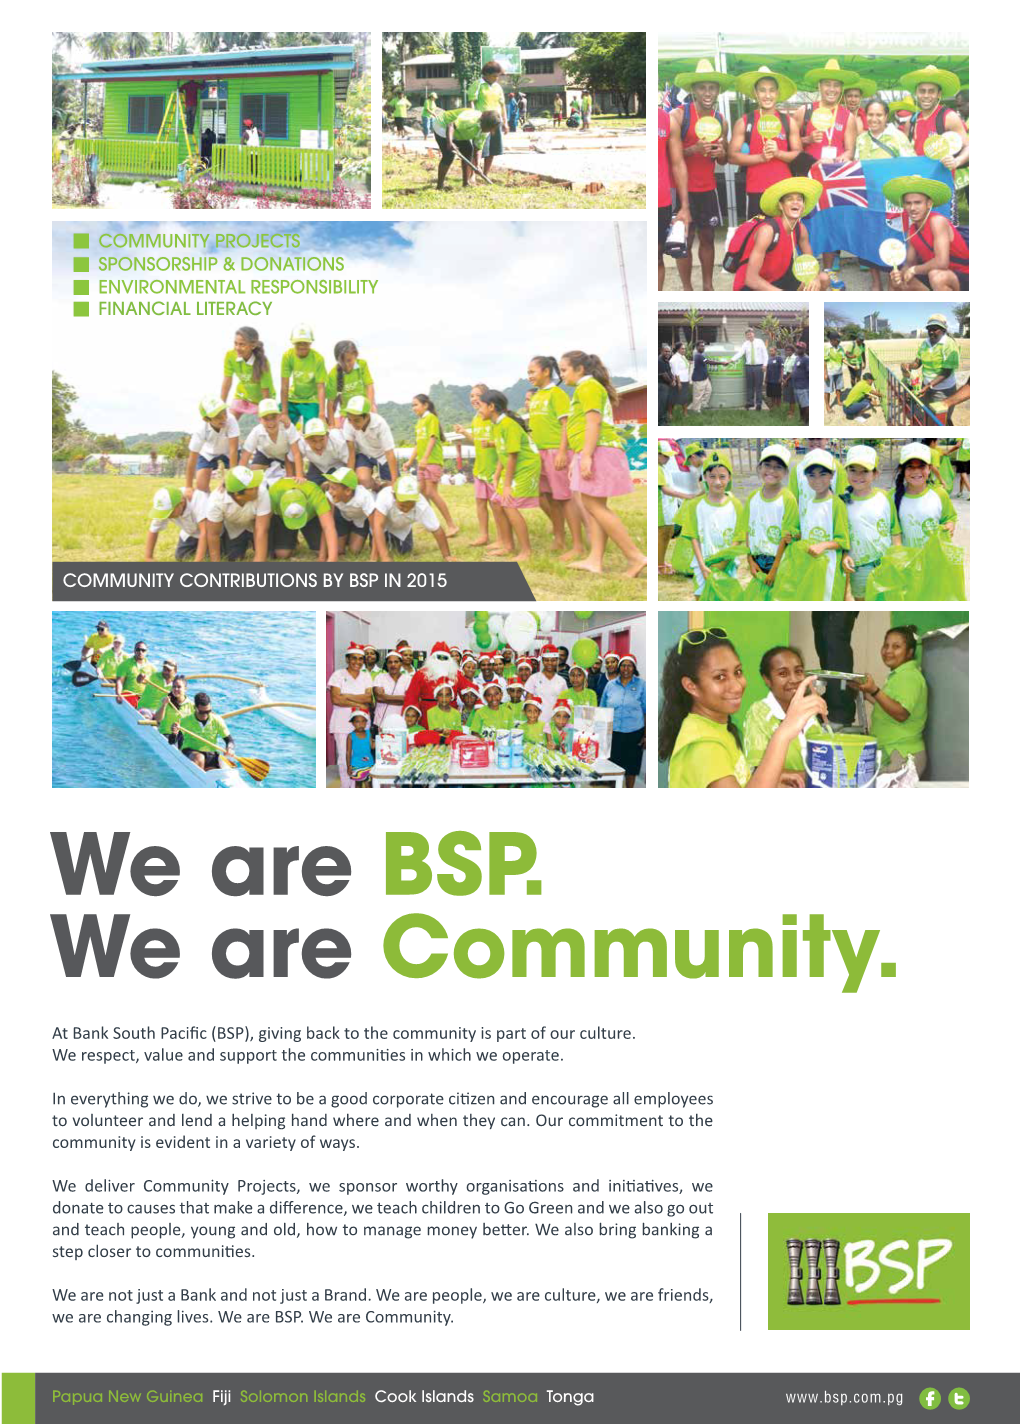 We Are BSP. We Are Community